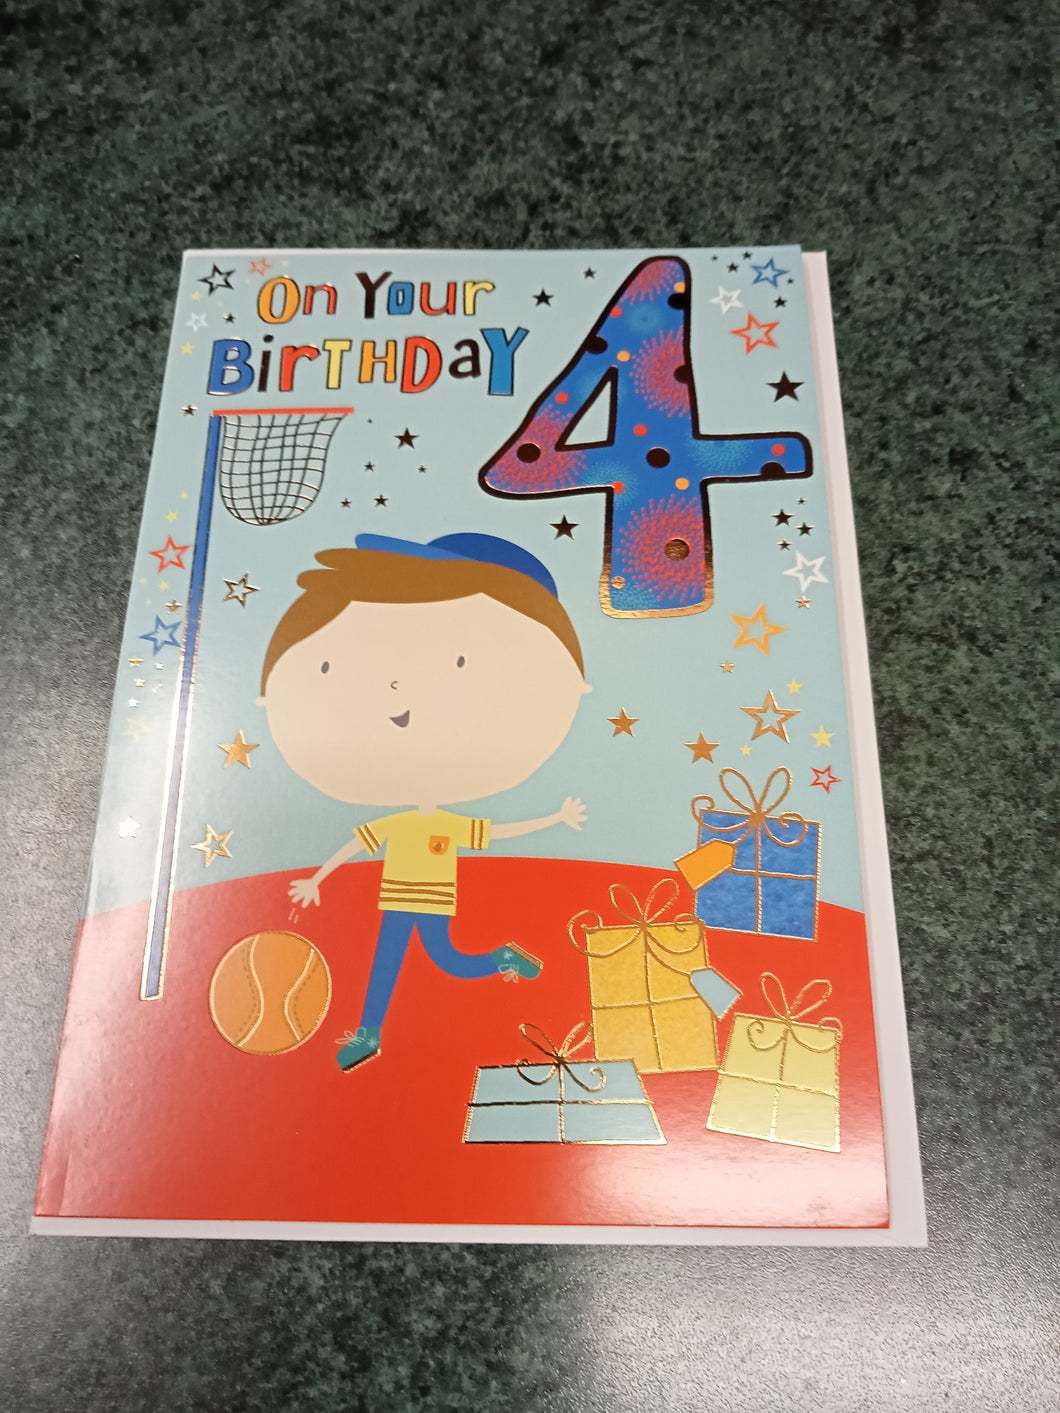 On your birthday 4